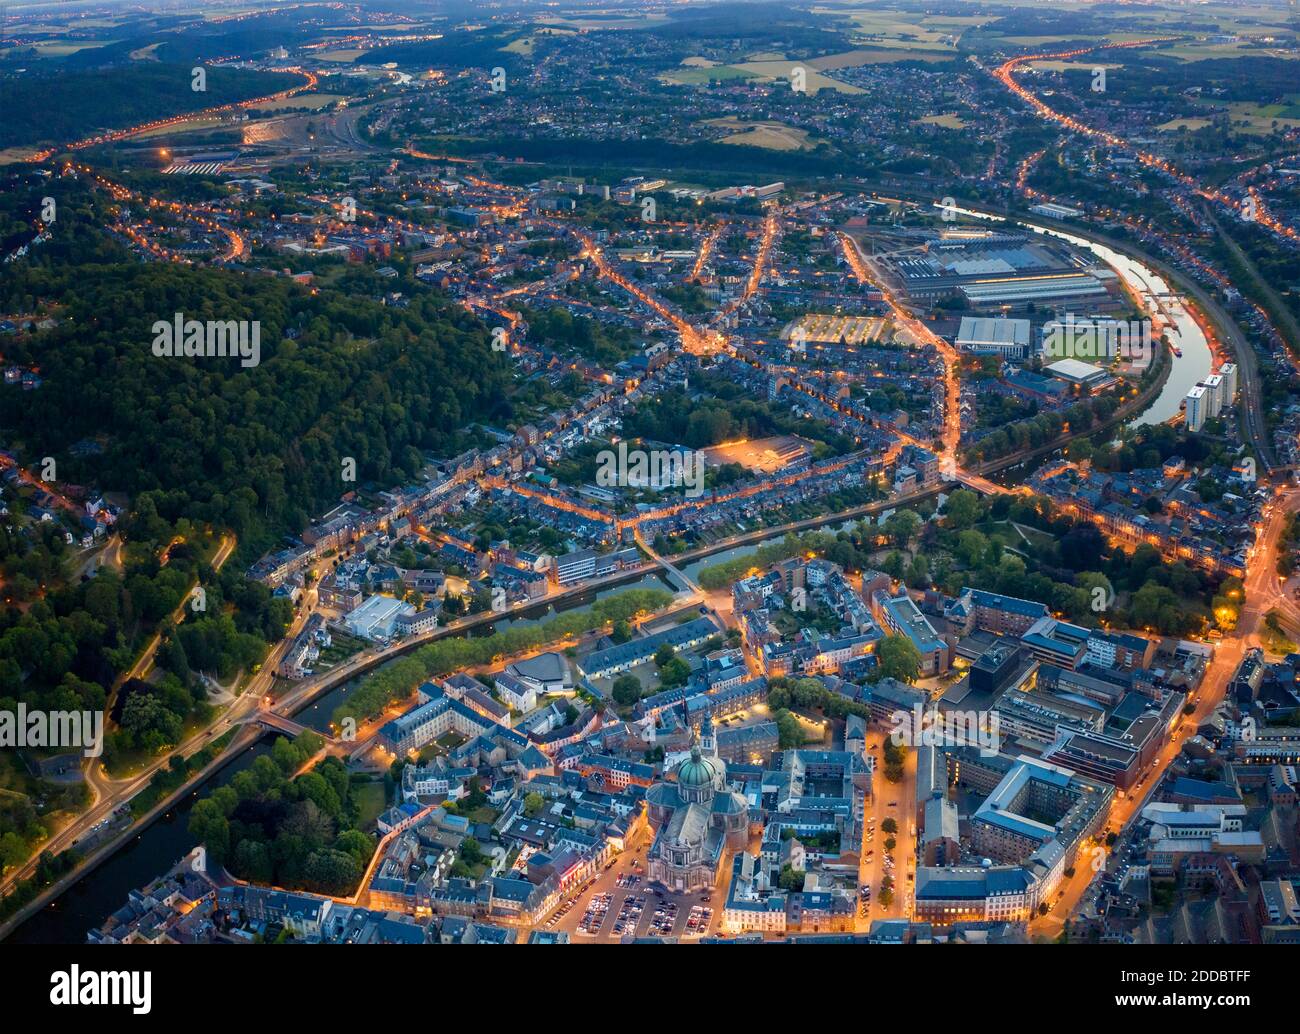 Belgium, Namur Province, Namur, Aerial view of riverside city at dusk Stock Photo